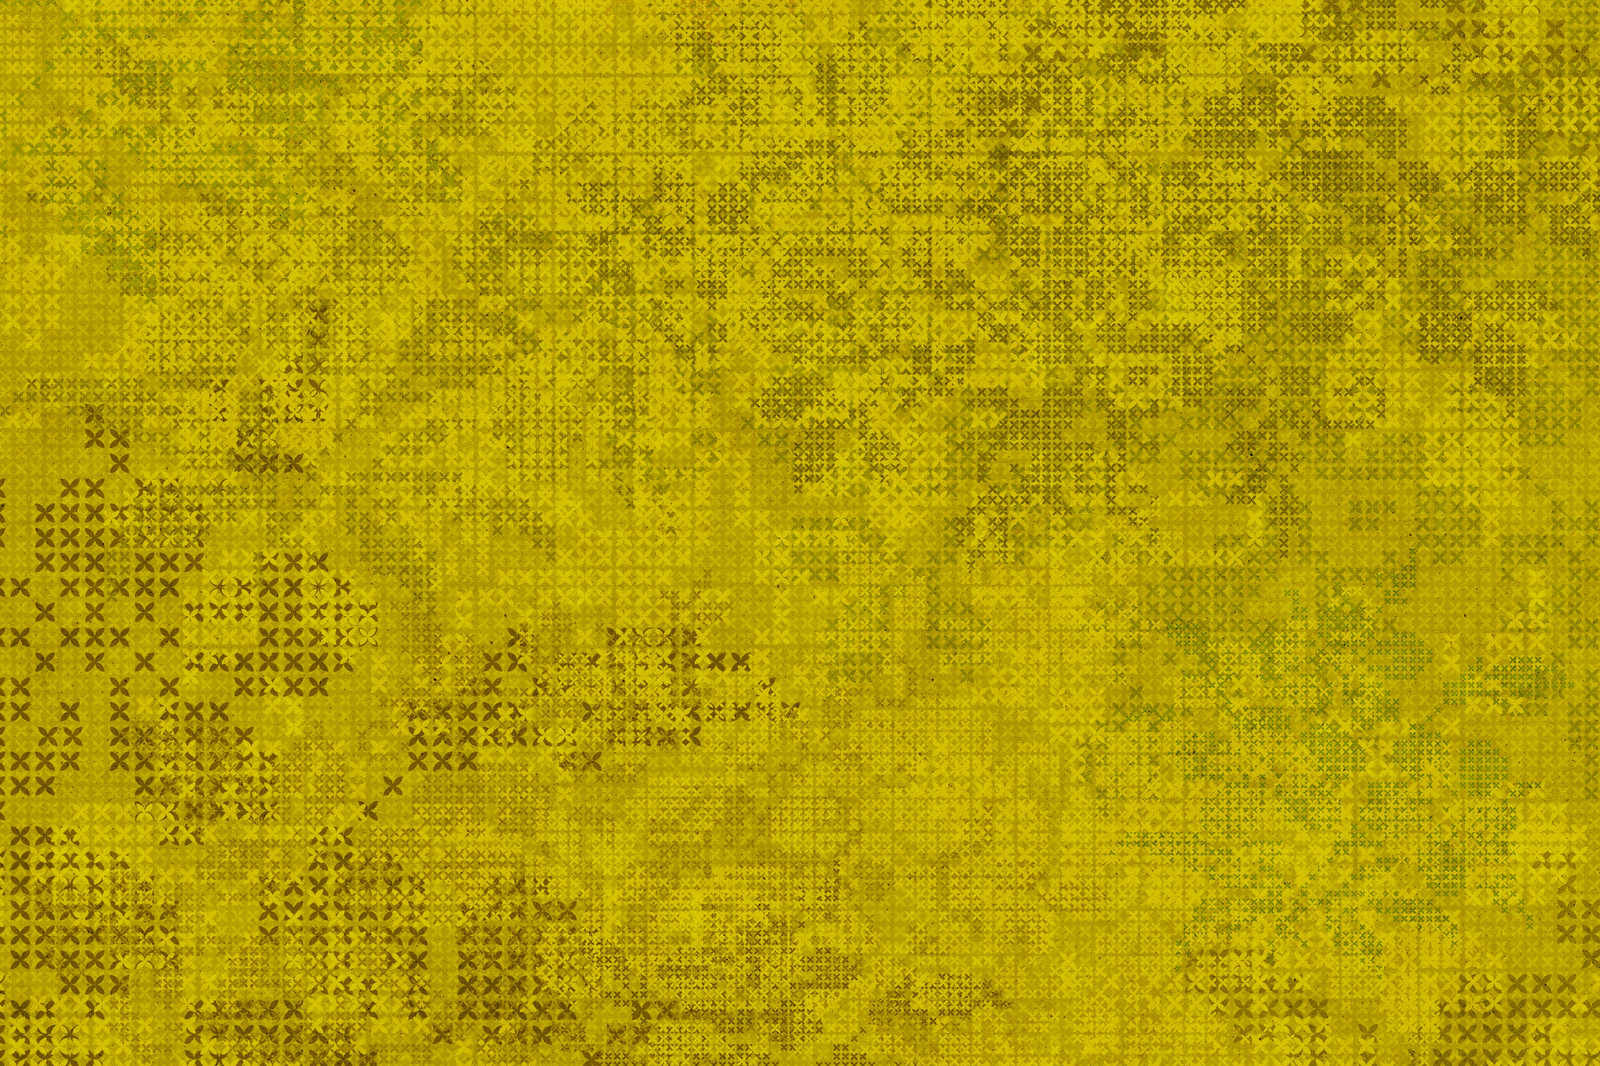             Pixel Canvas painting Cross stitch pattern - 0,90 m x 0,60 m
        